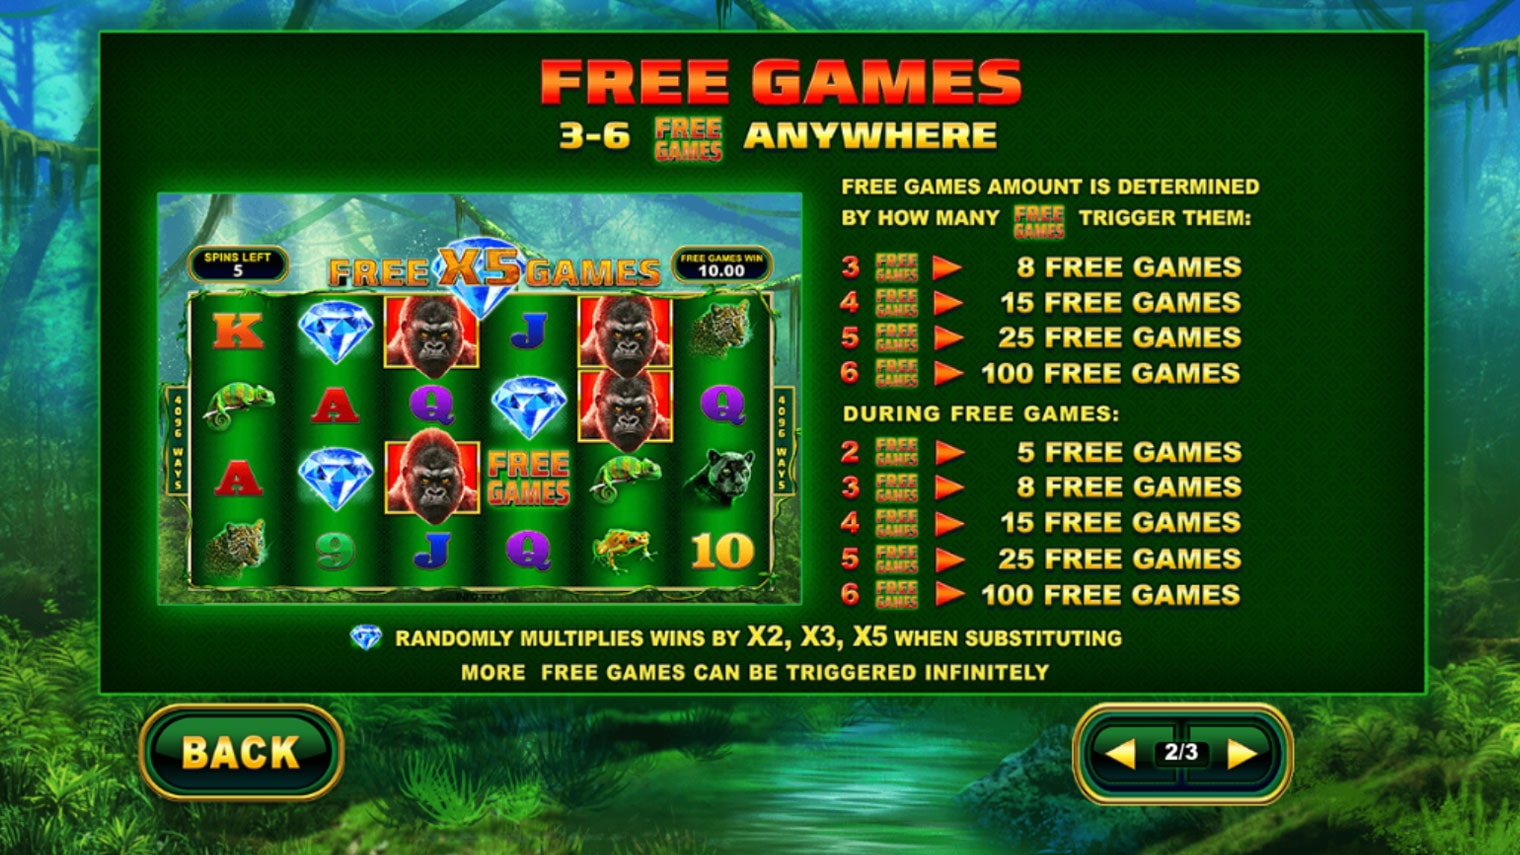 epic ape slot screenshot